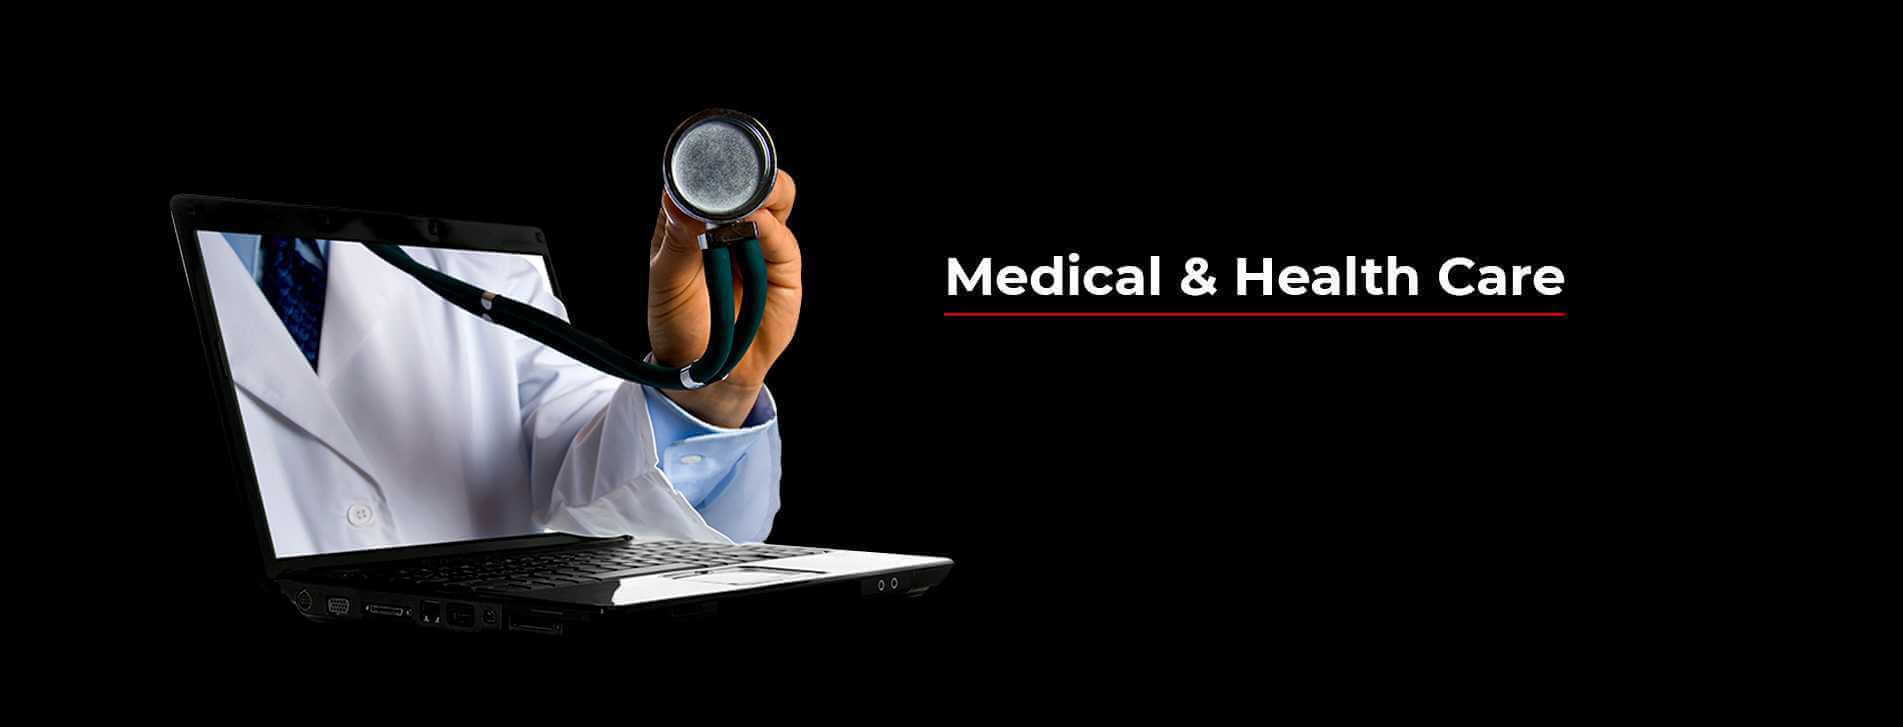 medical-&-health-care